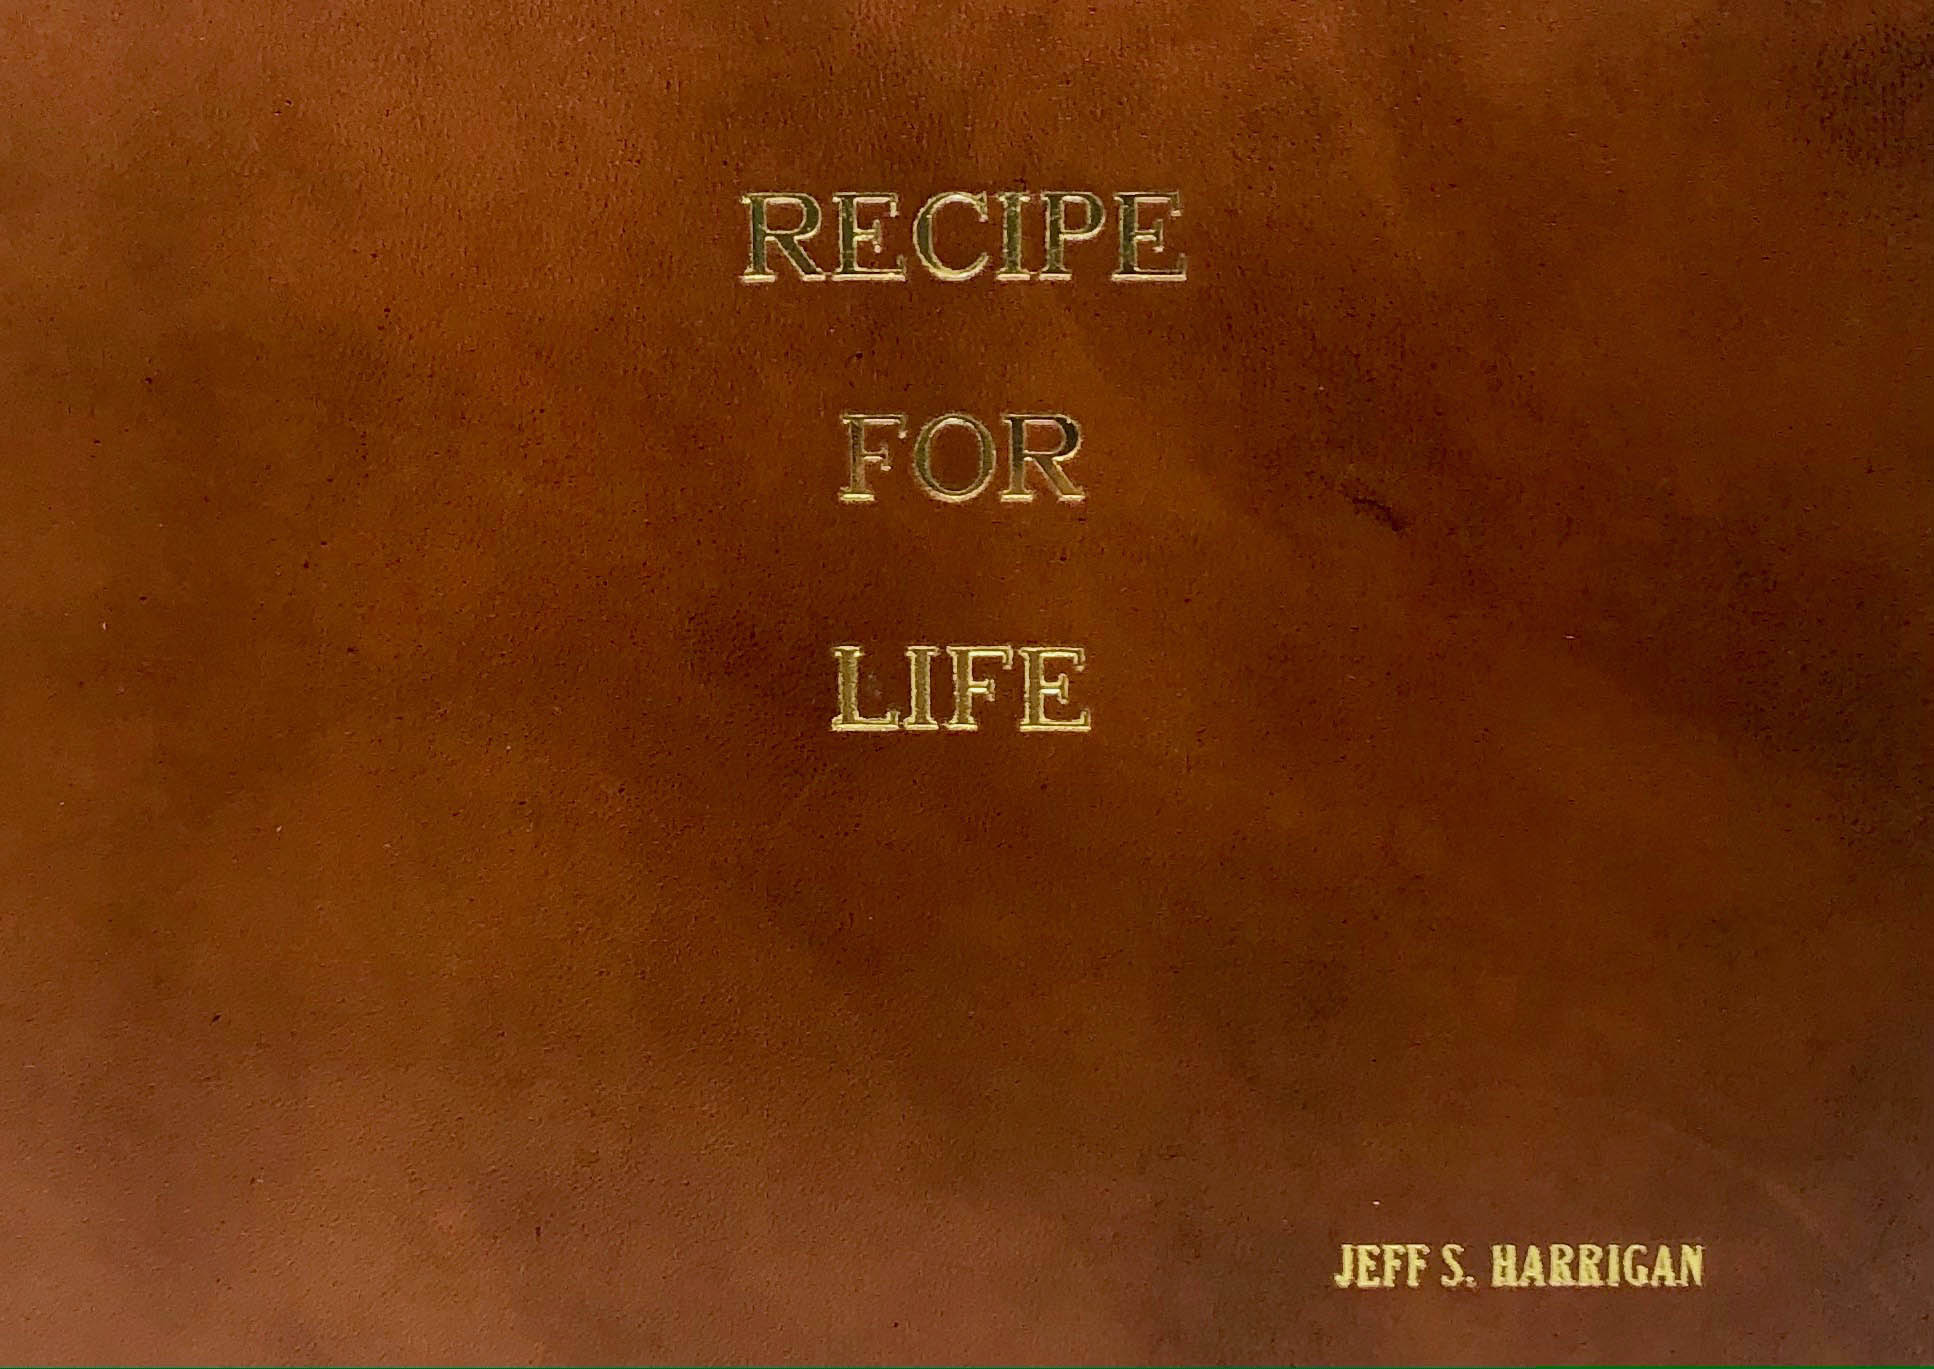 Recipe for Life | Custom Leather Book
Boston Harbor Bookbindery